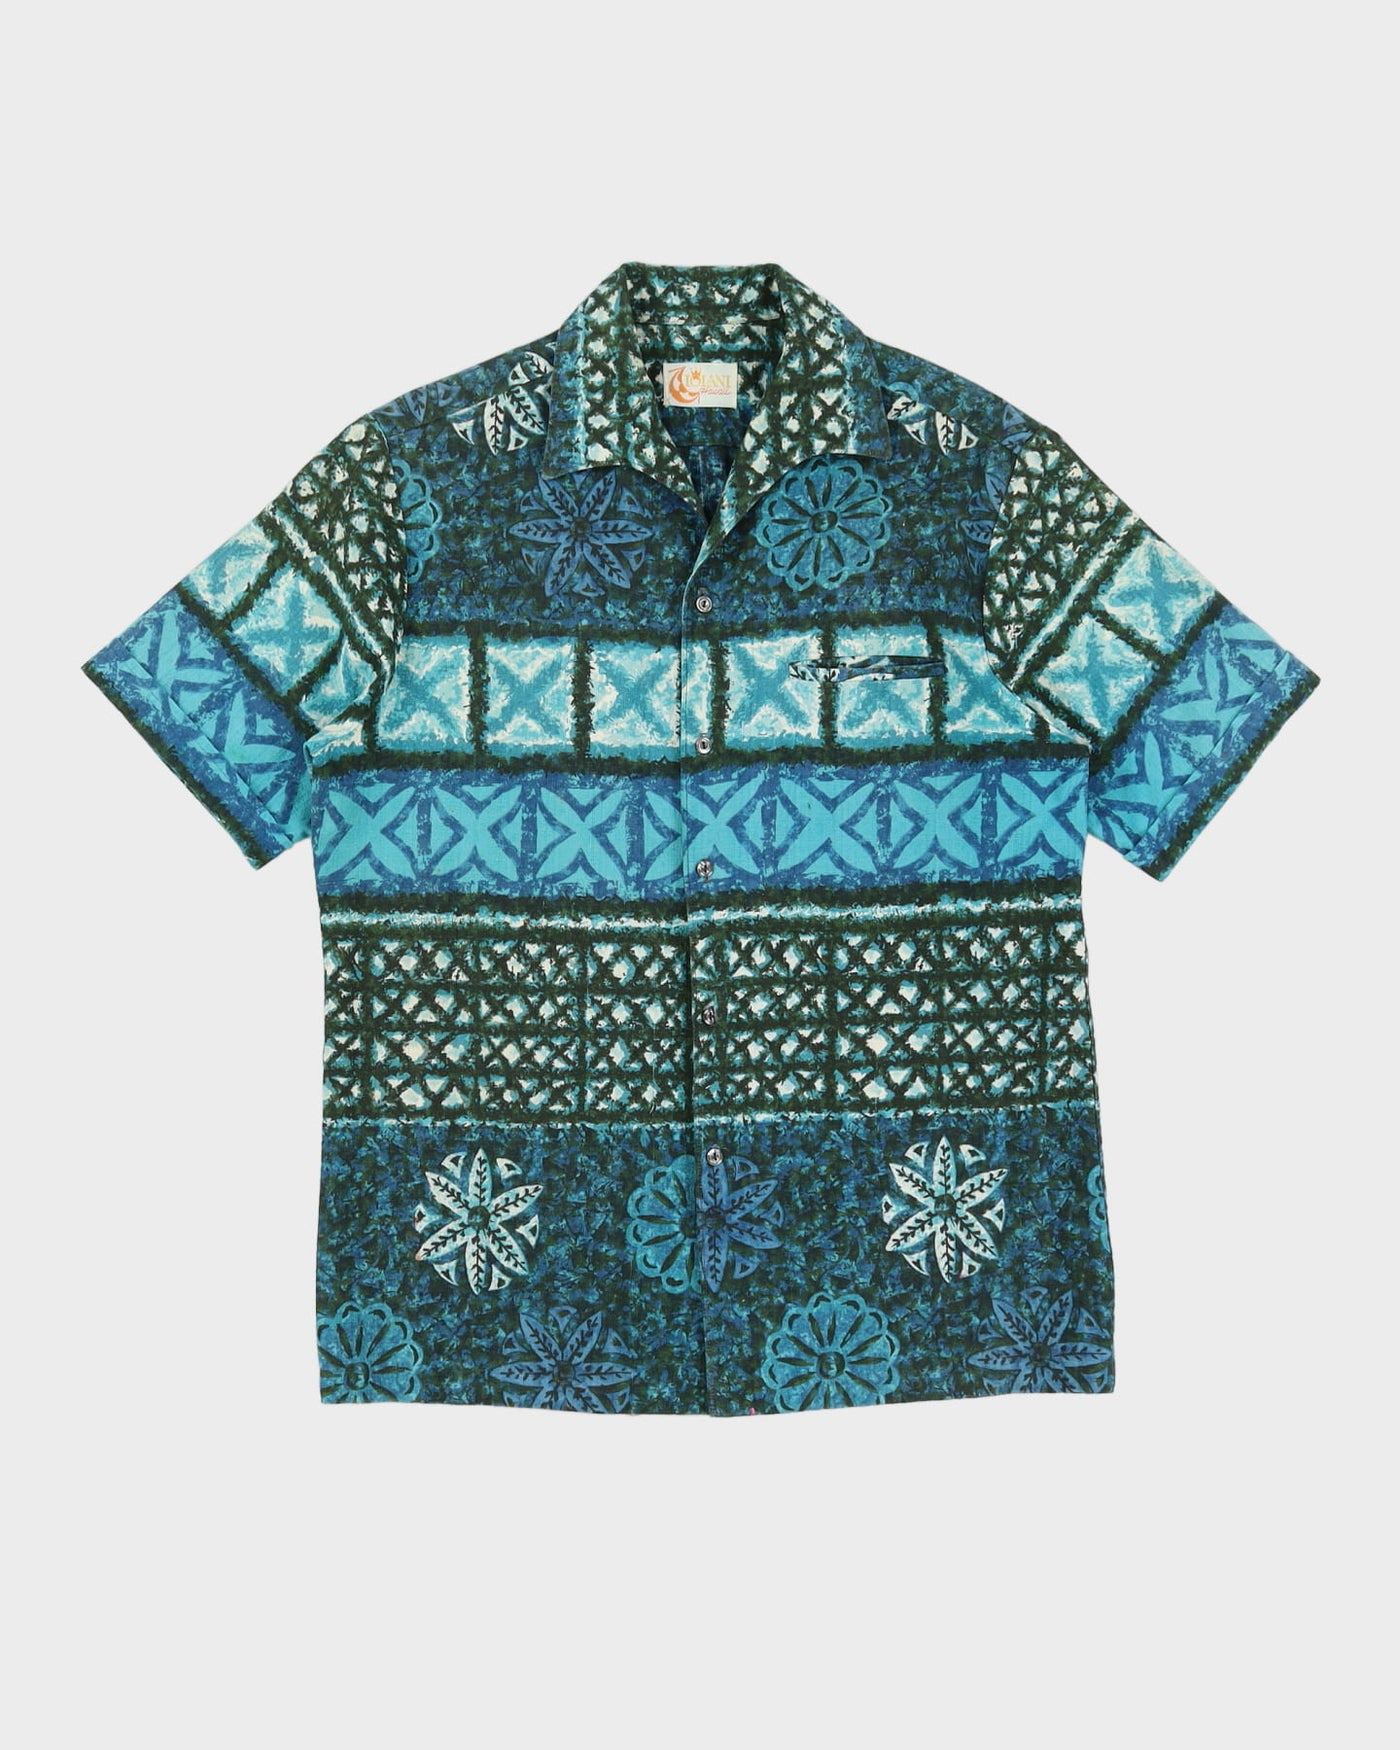 Vintage 60s Blue Short-Sleeve Hawaiian Shirt - M